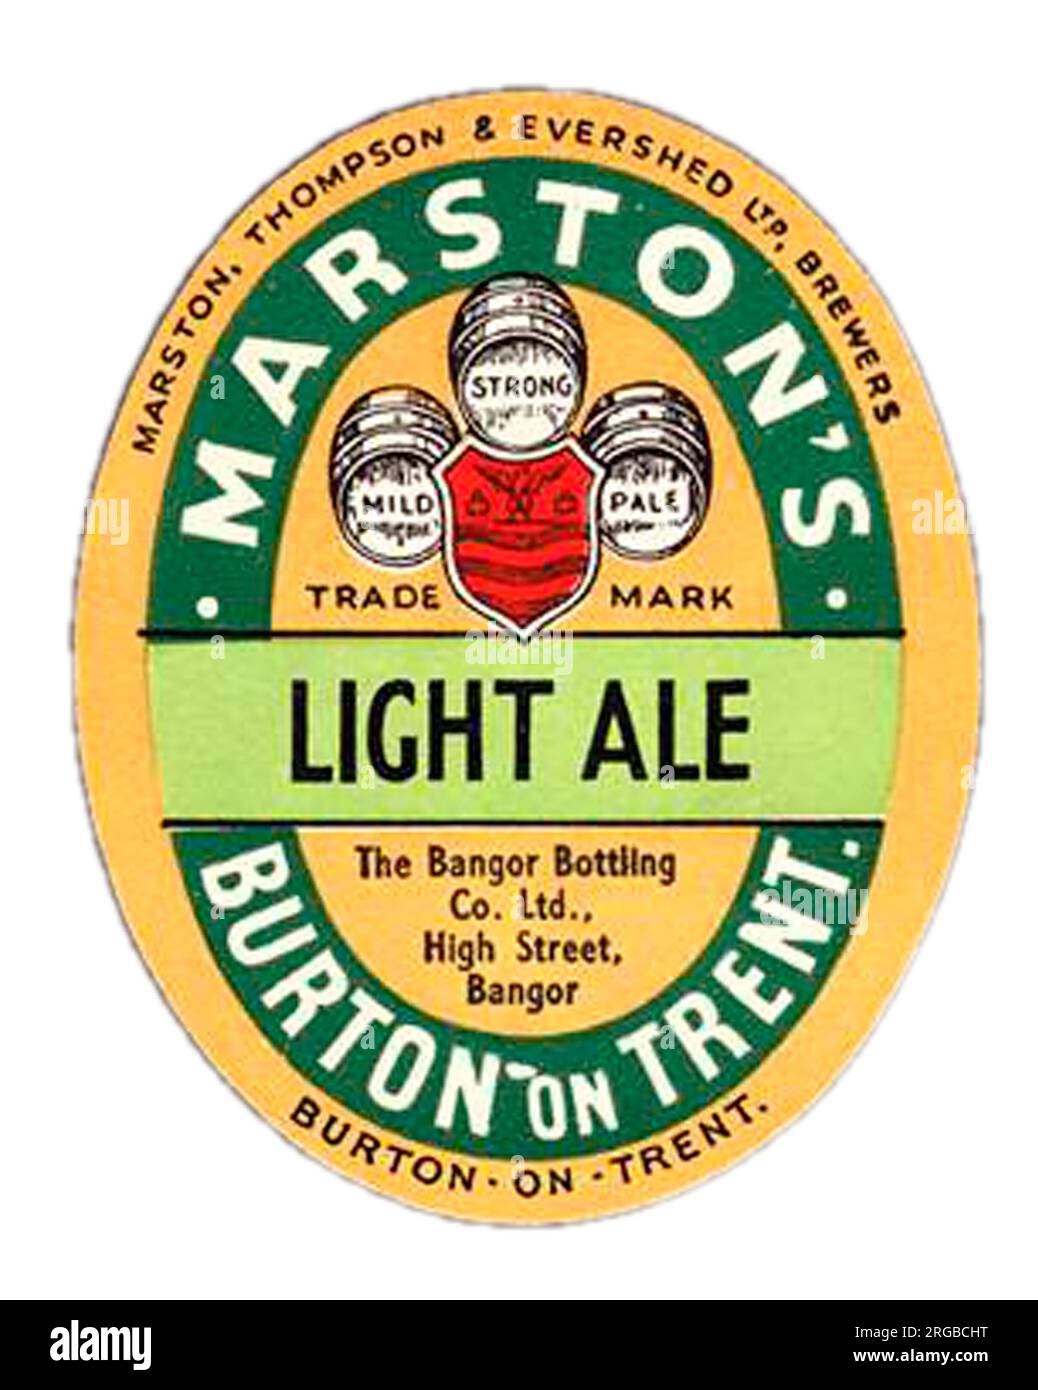 Marston's Light Ale Stock Photo